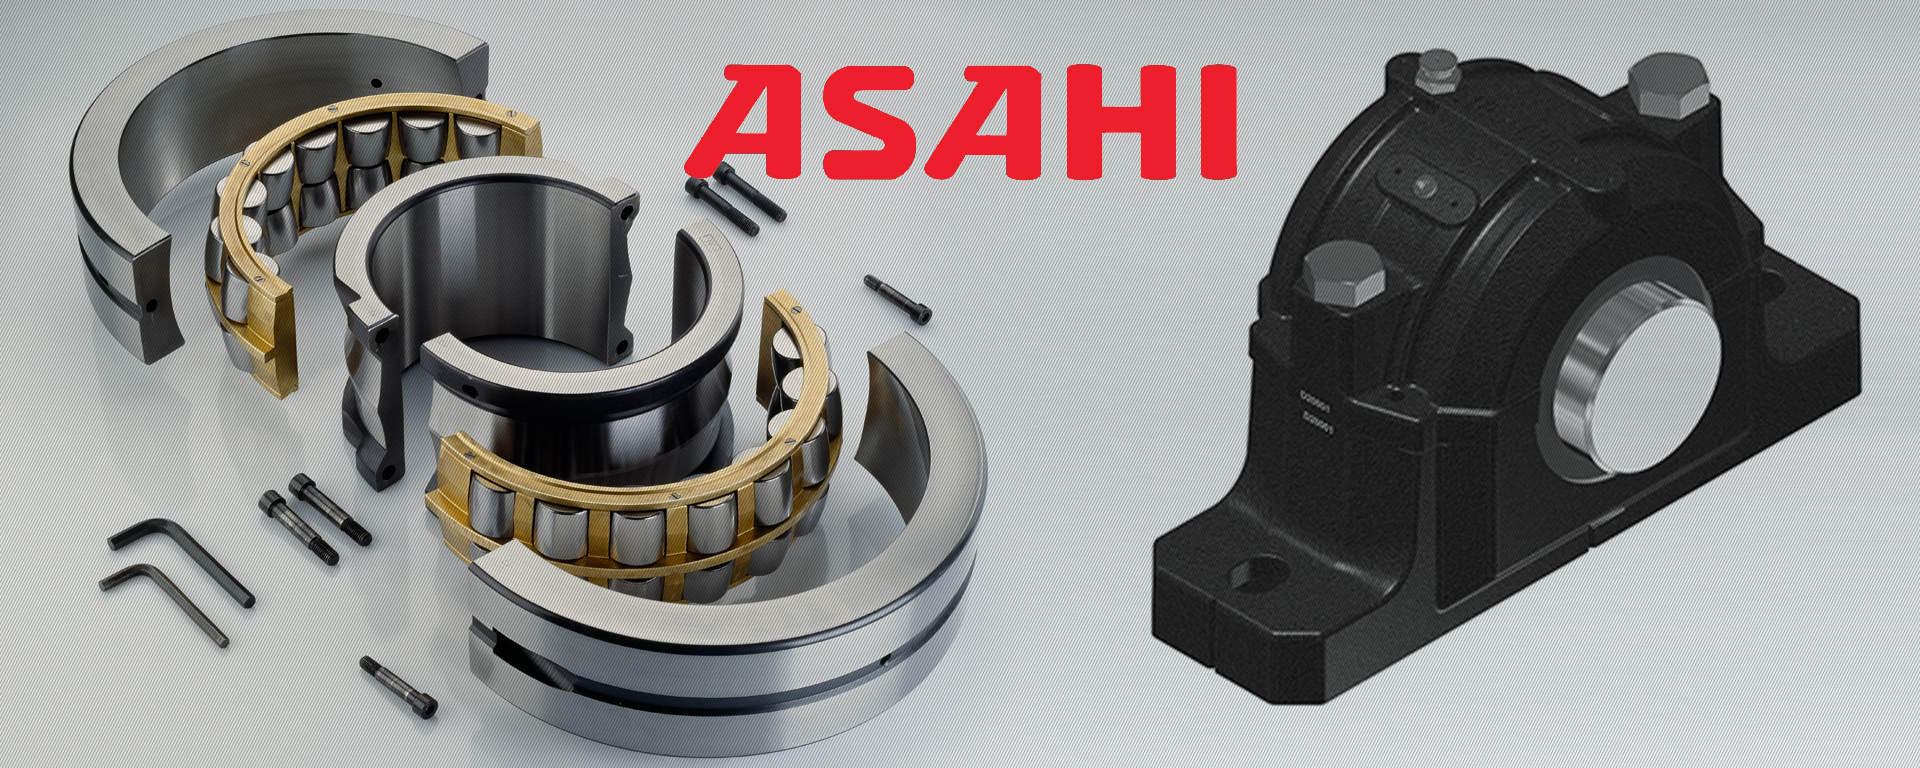 ASAHI轴承 - 上海精旋轴承有限公司